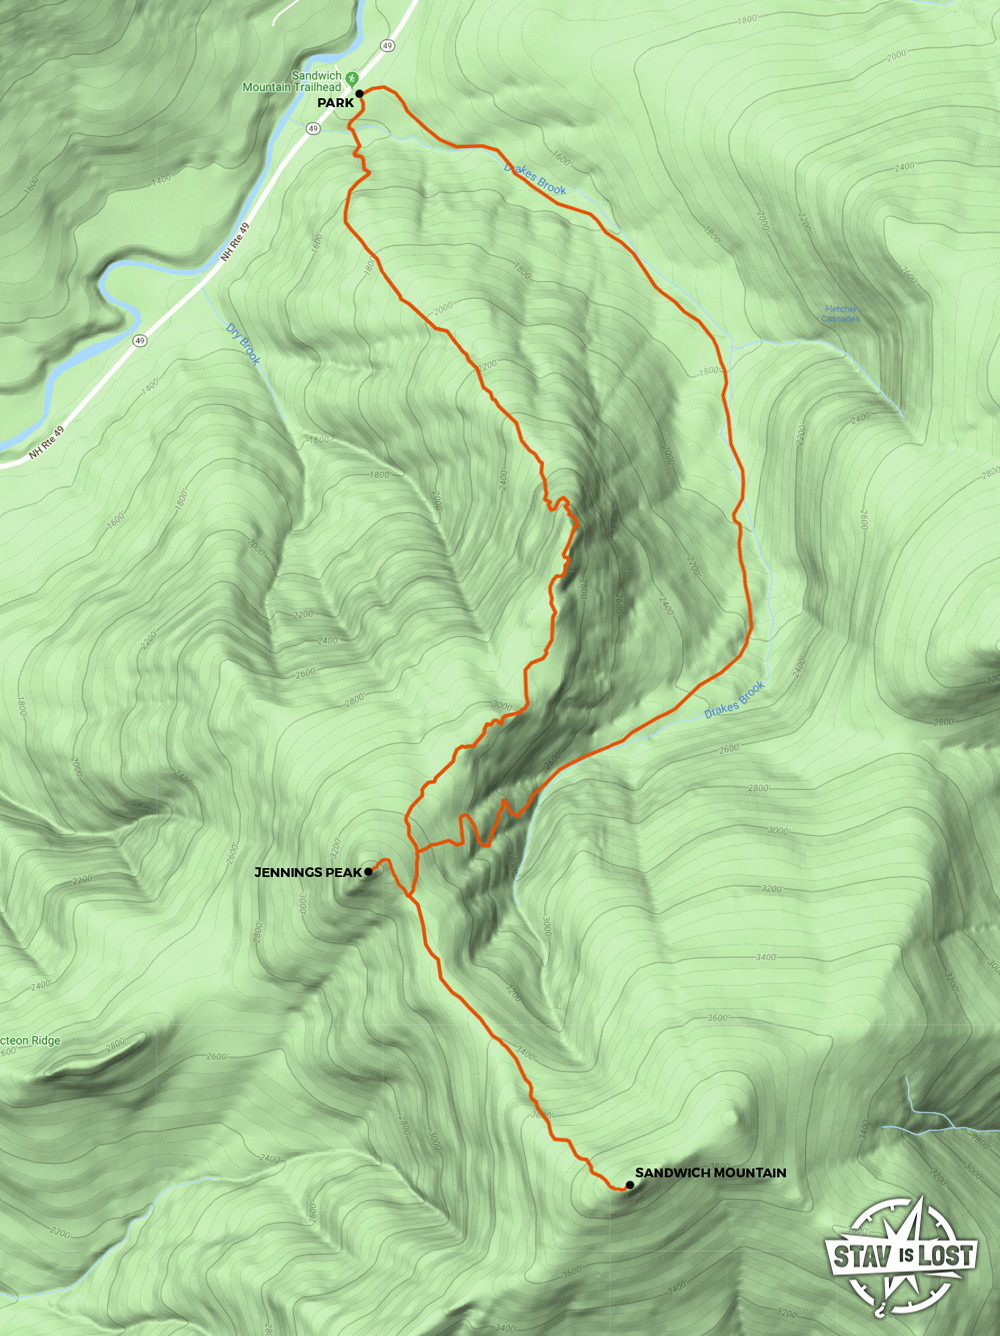 map for Jennings Peak, Sandwich Mountain, Drakes Brook Loop by stav is lost